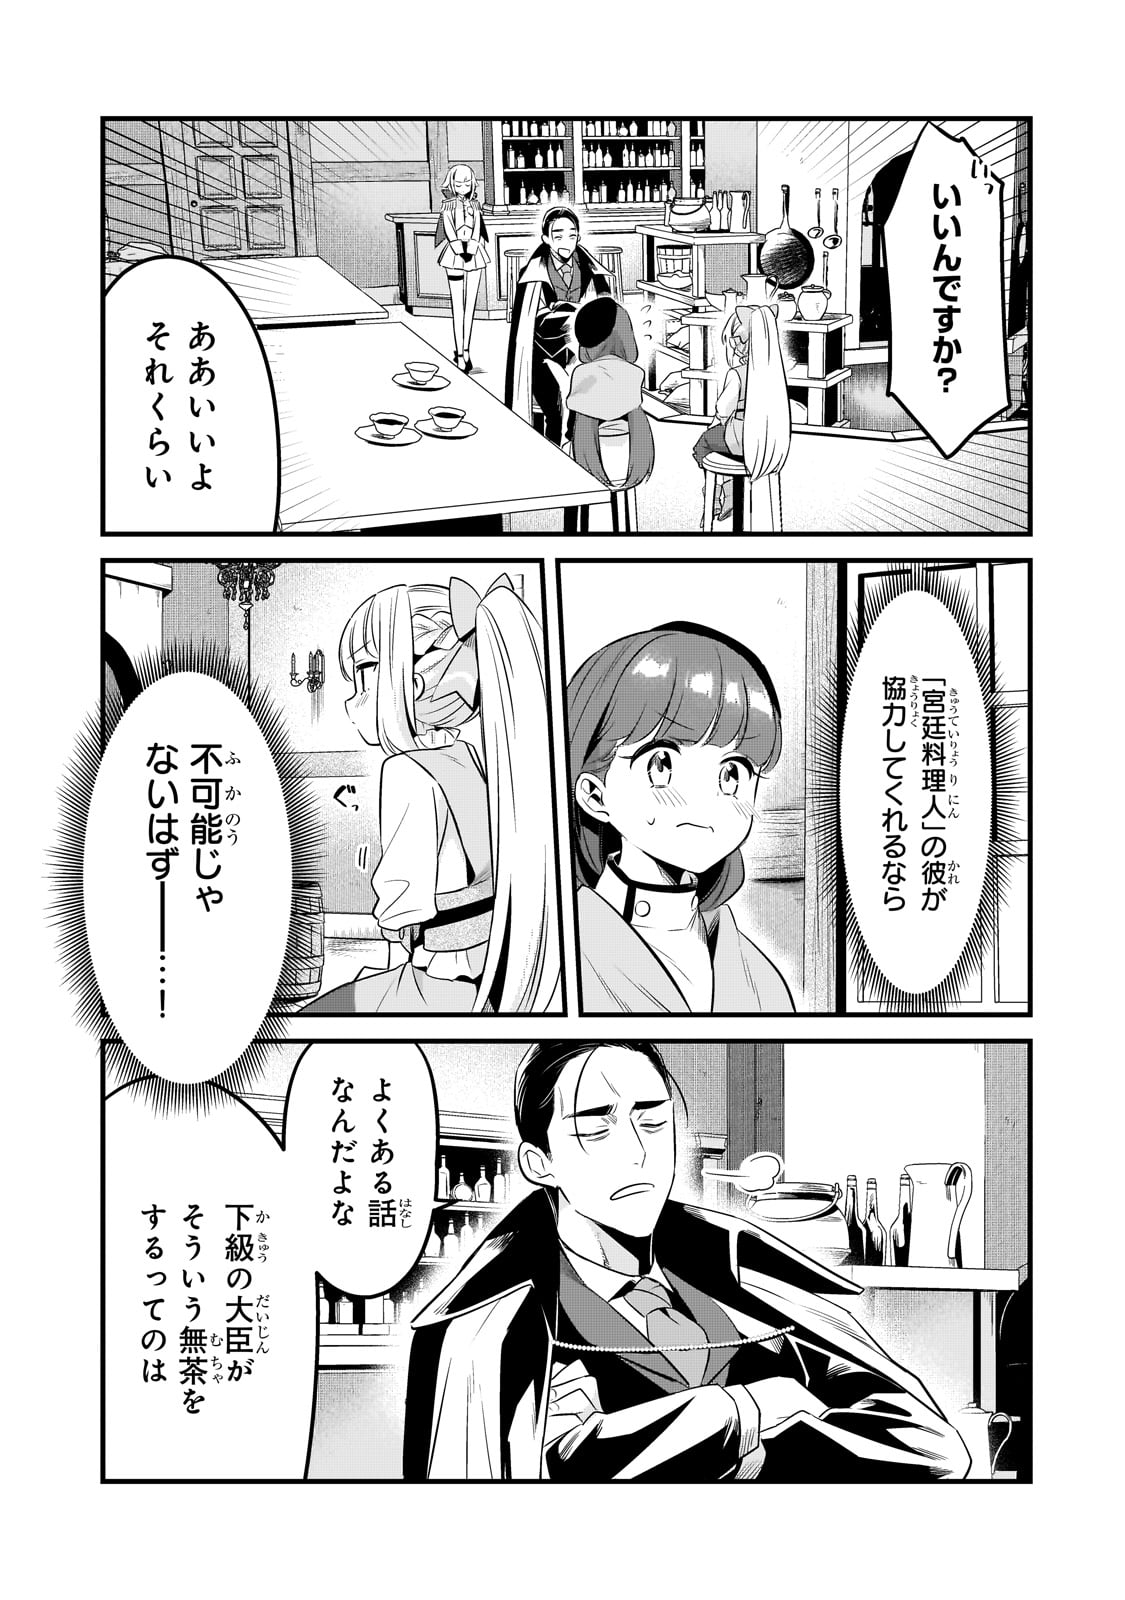 Tsuihousha Shokudou e Youkoso! - Chapter 41 - Page 3